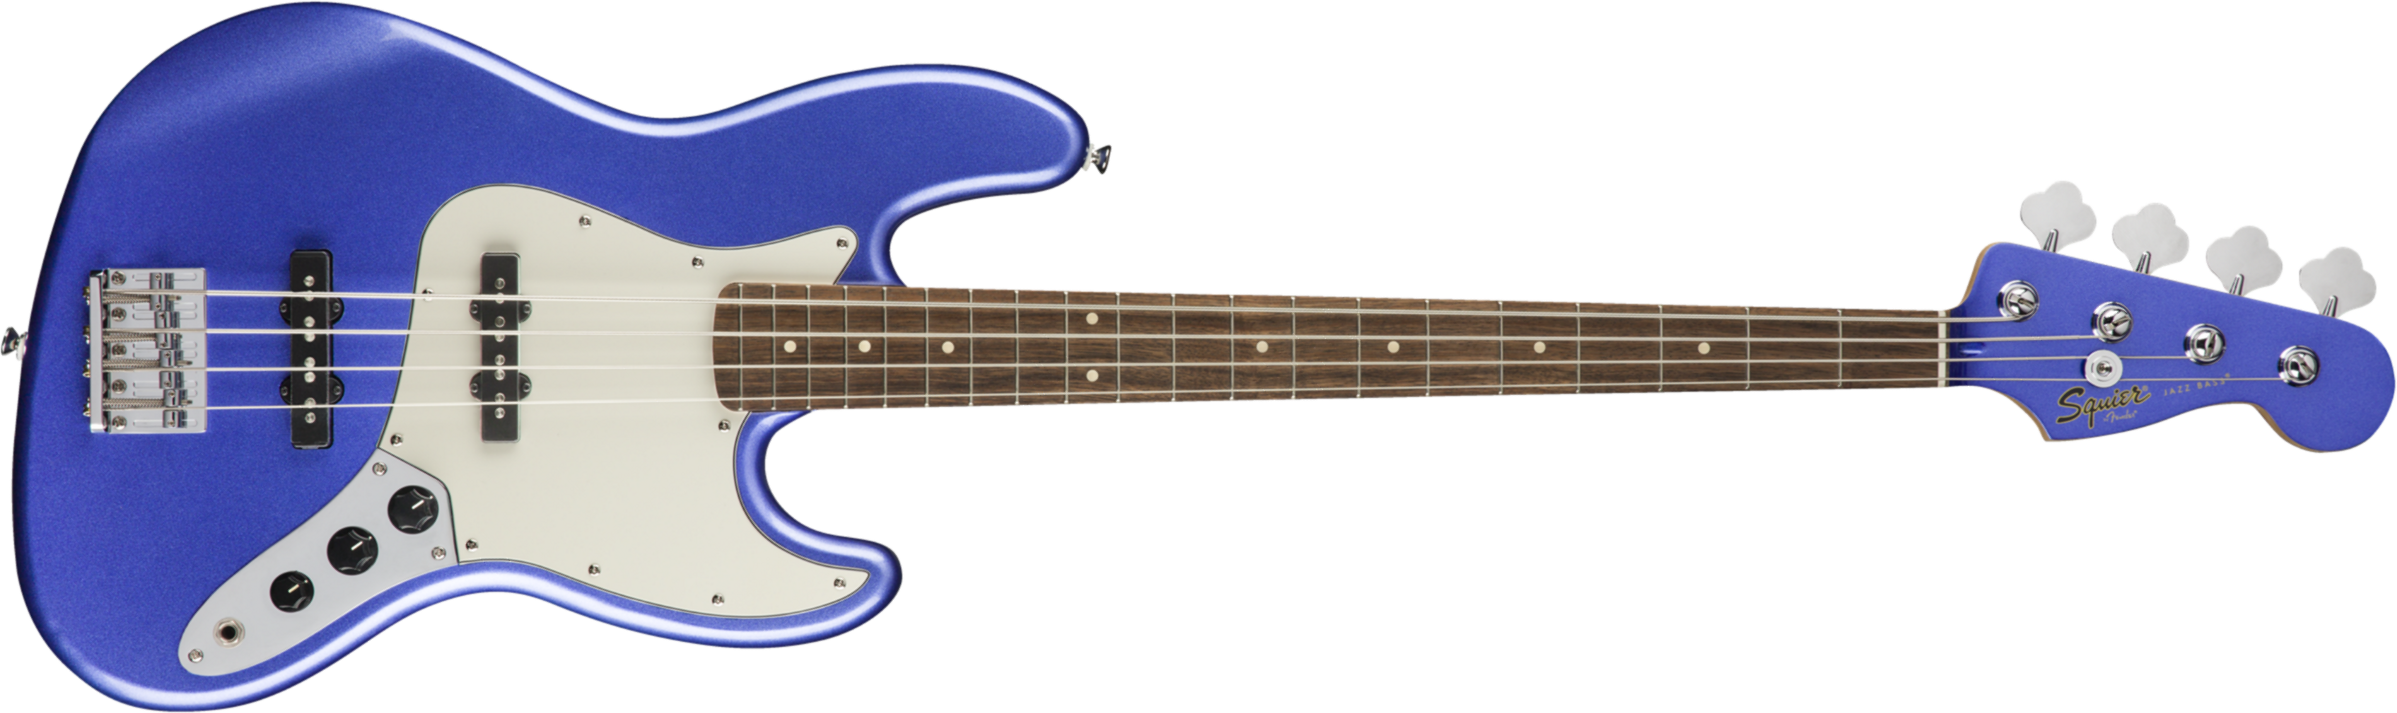 Squier Contemporary Jazz Bass Lau - Ocean Blue Metallic - Solid body elektrische bas - Main picture